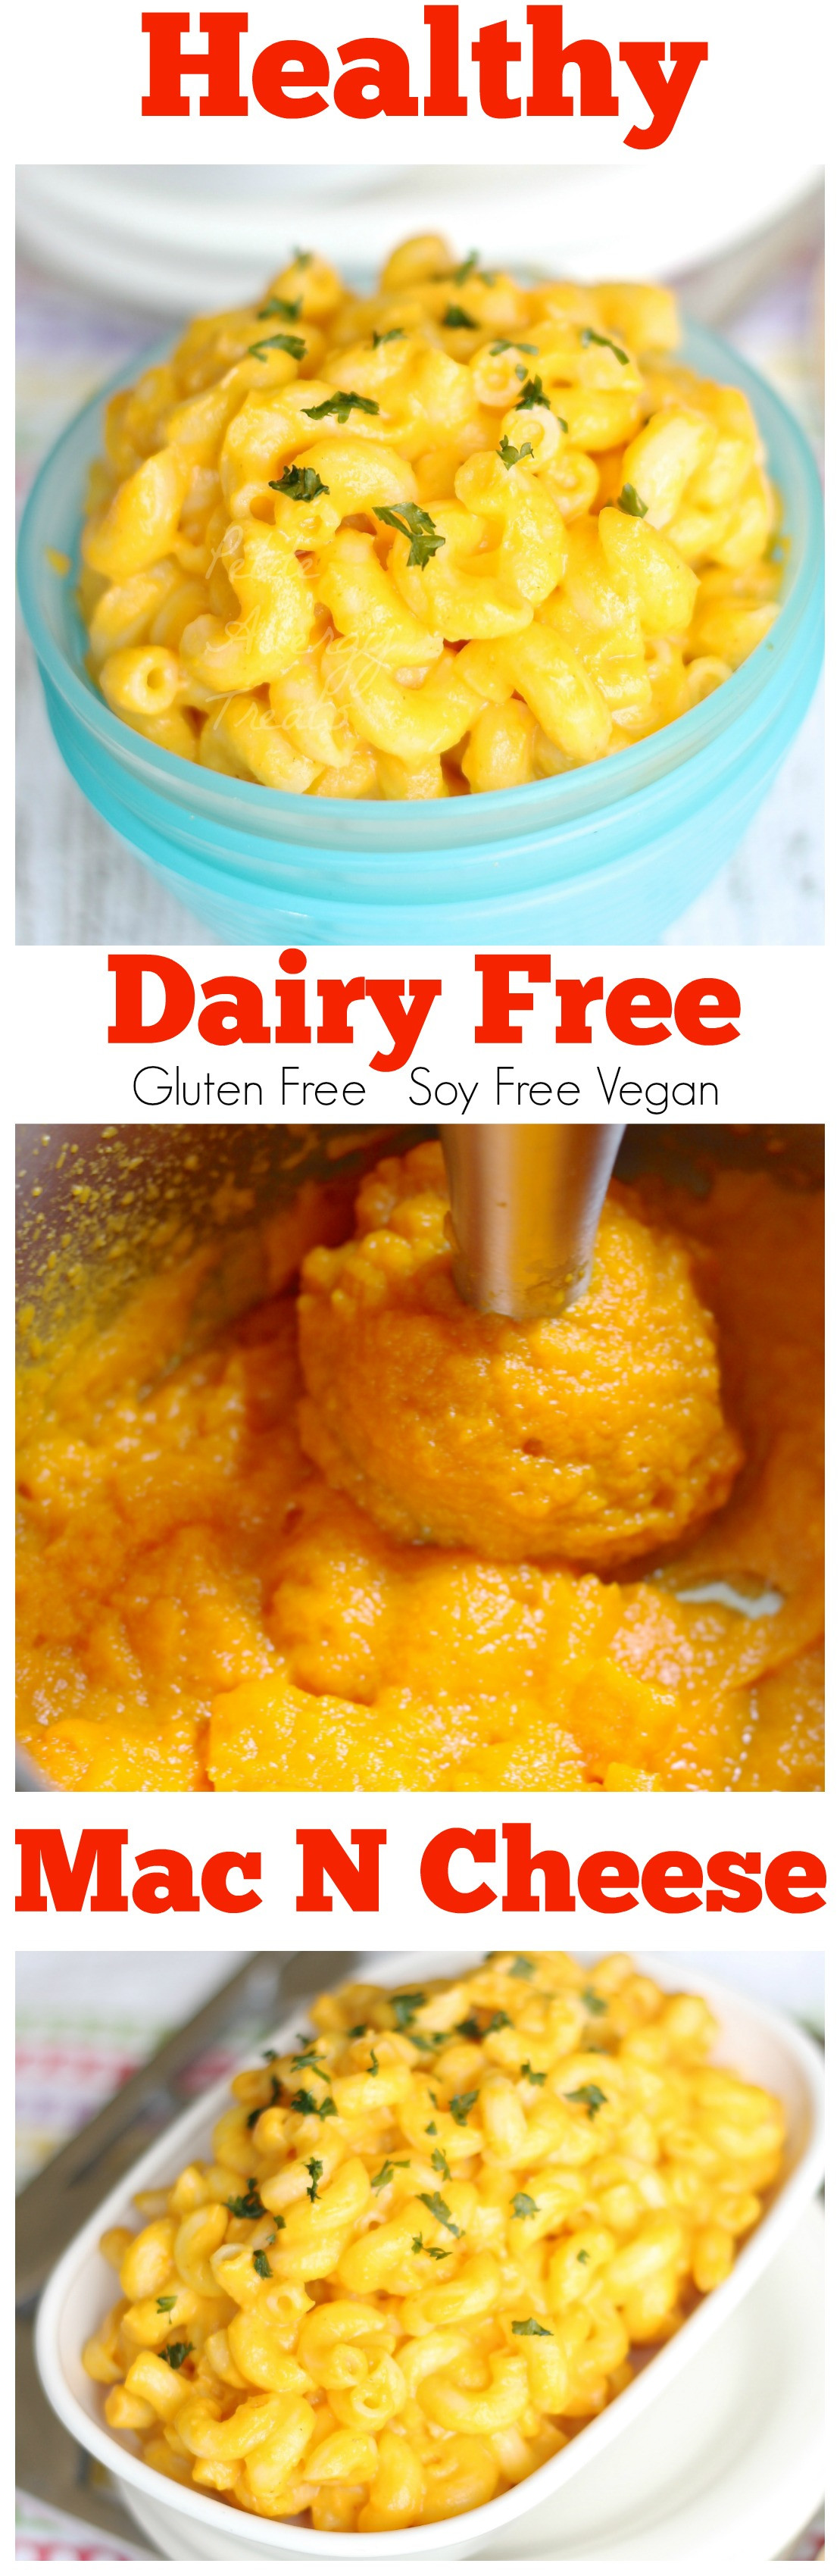 Gluten Free Dairy Free Soy Free Recipes
 Dairy Free Mac and Cheese Gluten Free Vegan Petite